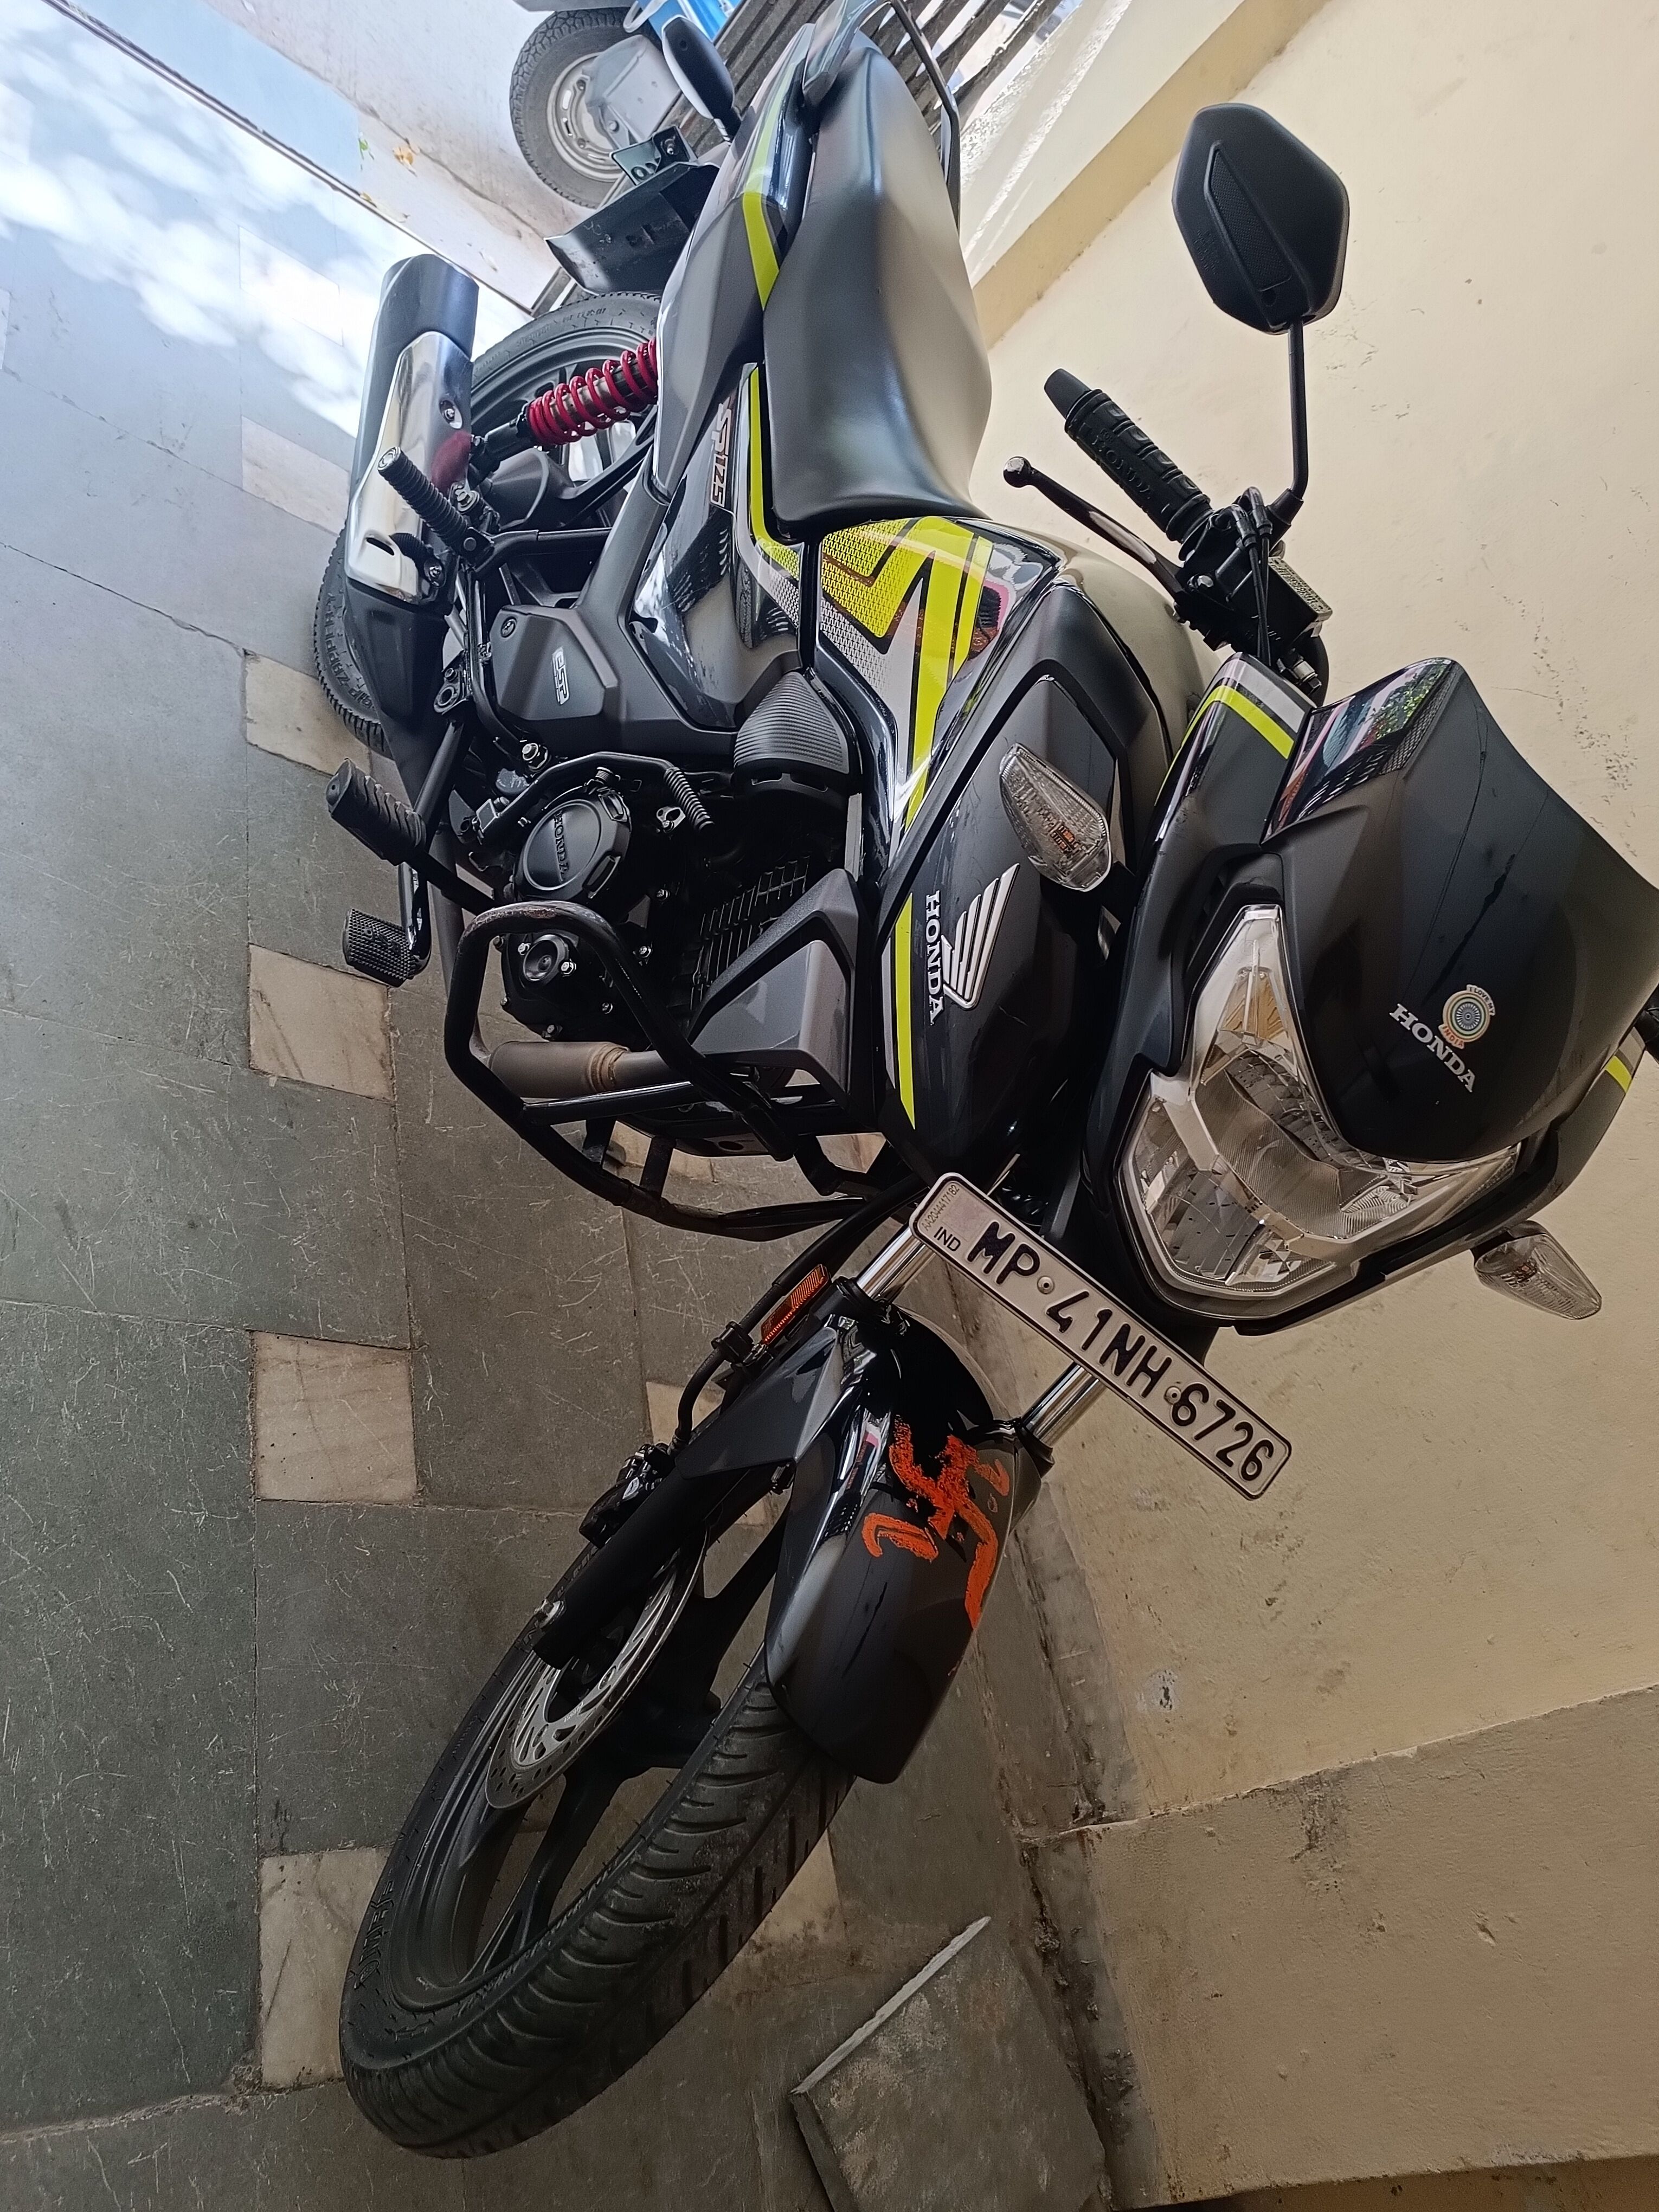 Honda CB 125 Shine SP Bike at best price in Raipur by G K Honda